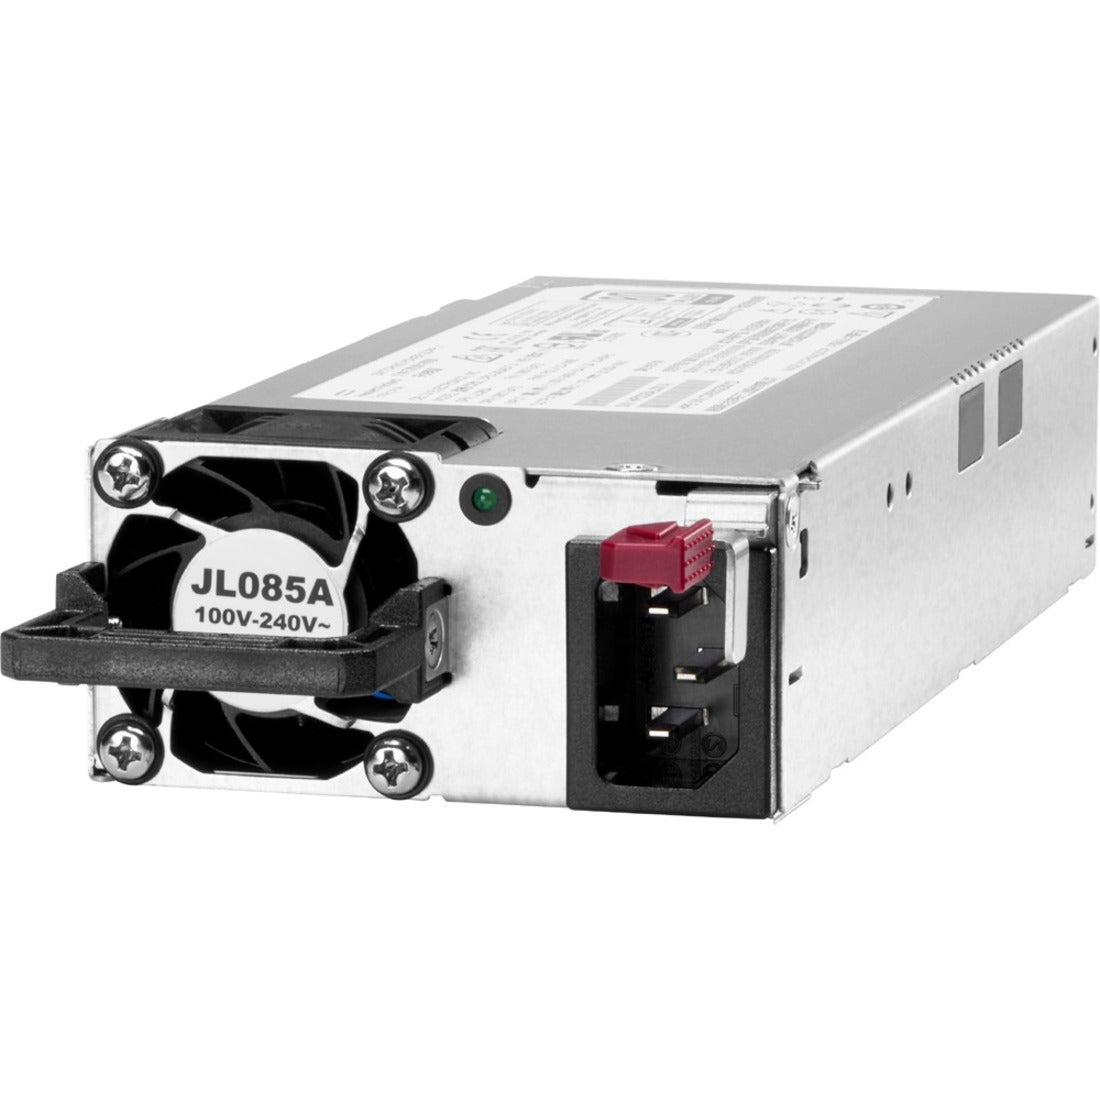 HPE E Aruba X371 12VDC 250W 100-240VAC Power Supply (JL085A)